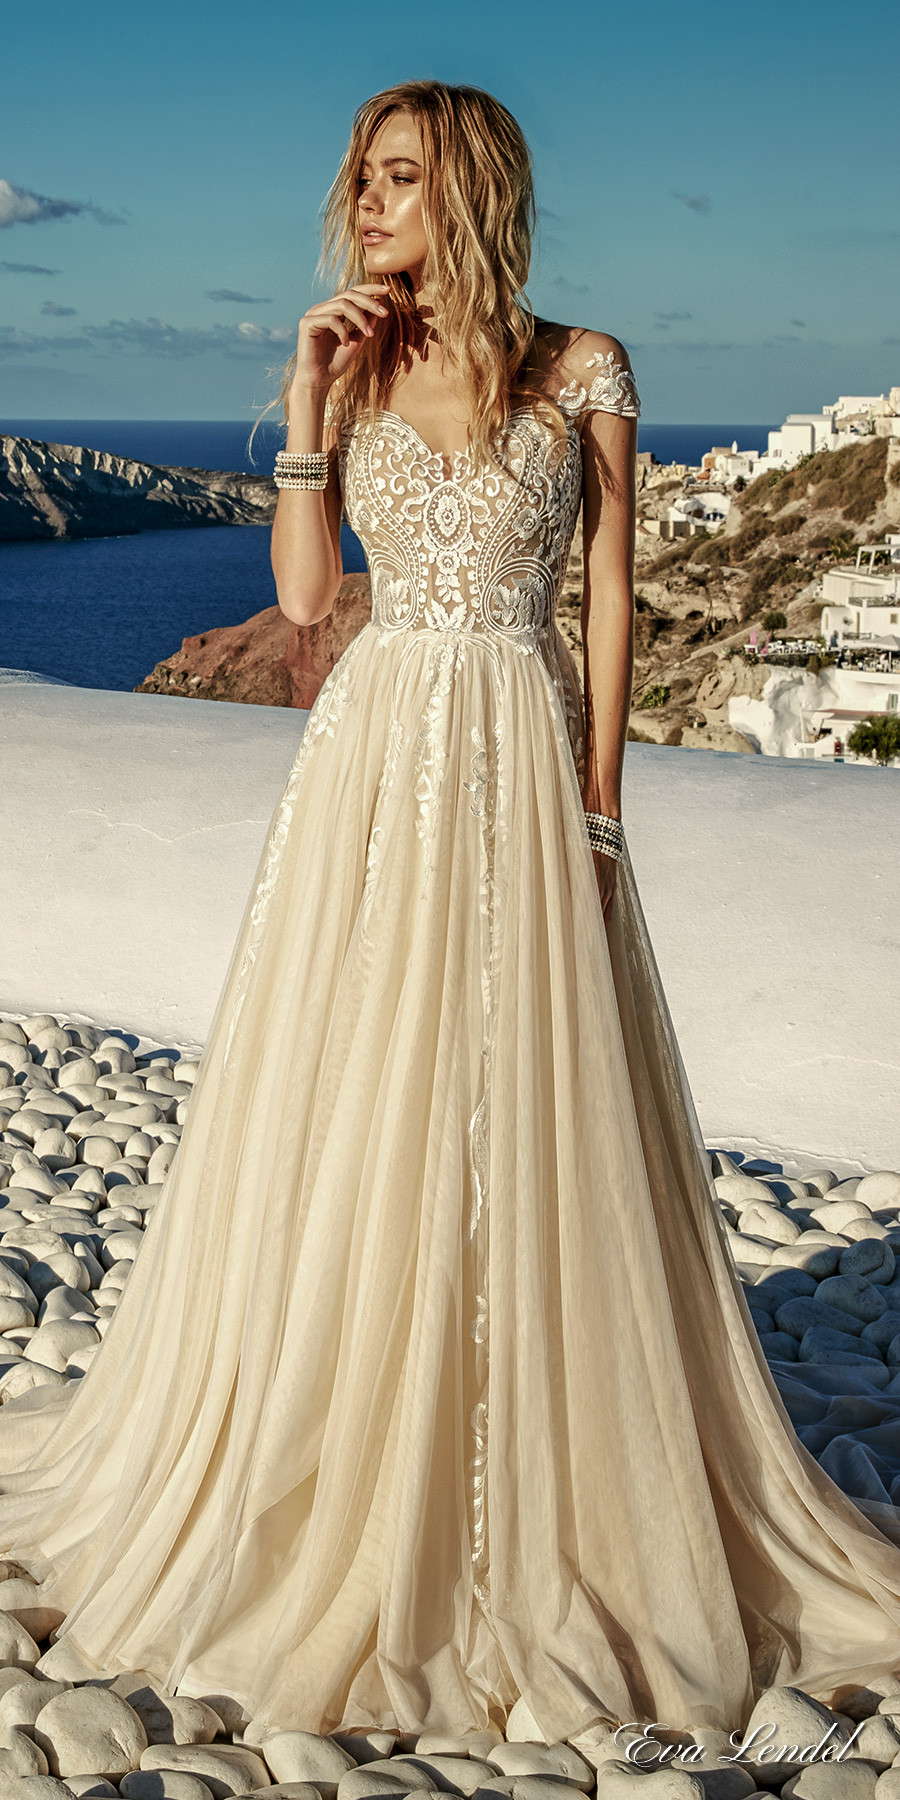 Ivory Colored Wedding Dresses
 Eva Lendel 2017 Wedding Dresses — “Santorini” Bridal